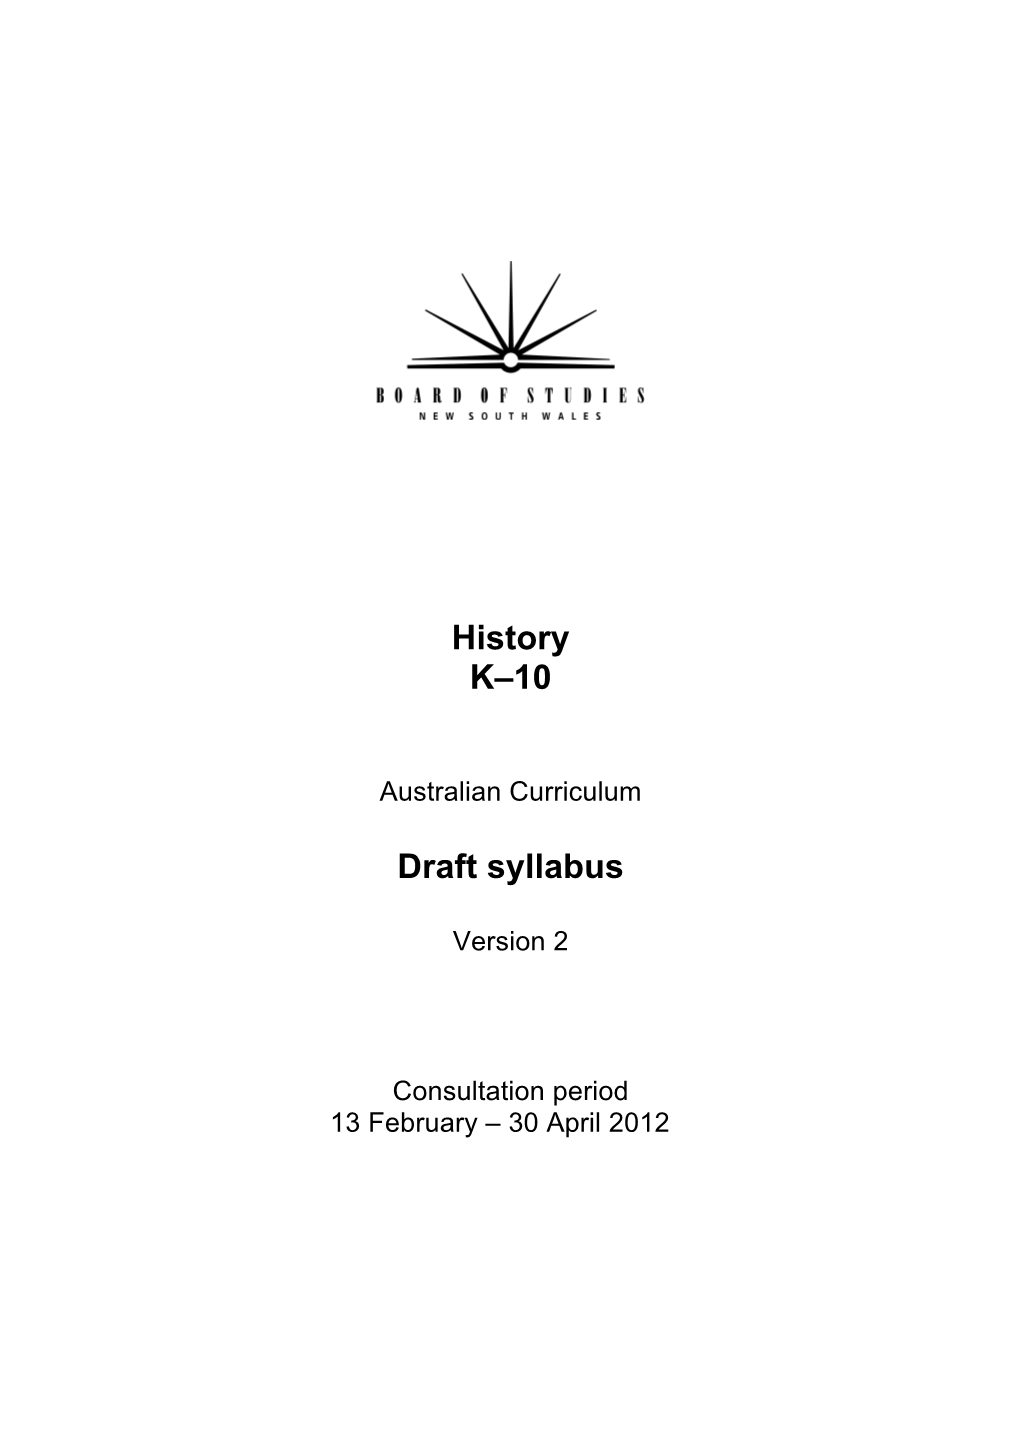 History K-10 Draft Syllabus Version 2